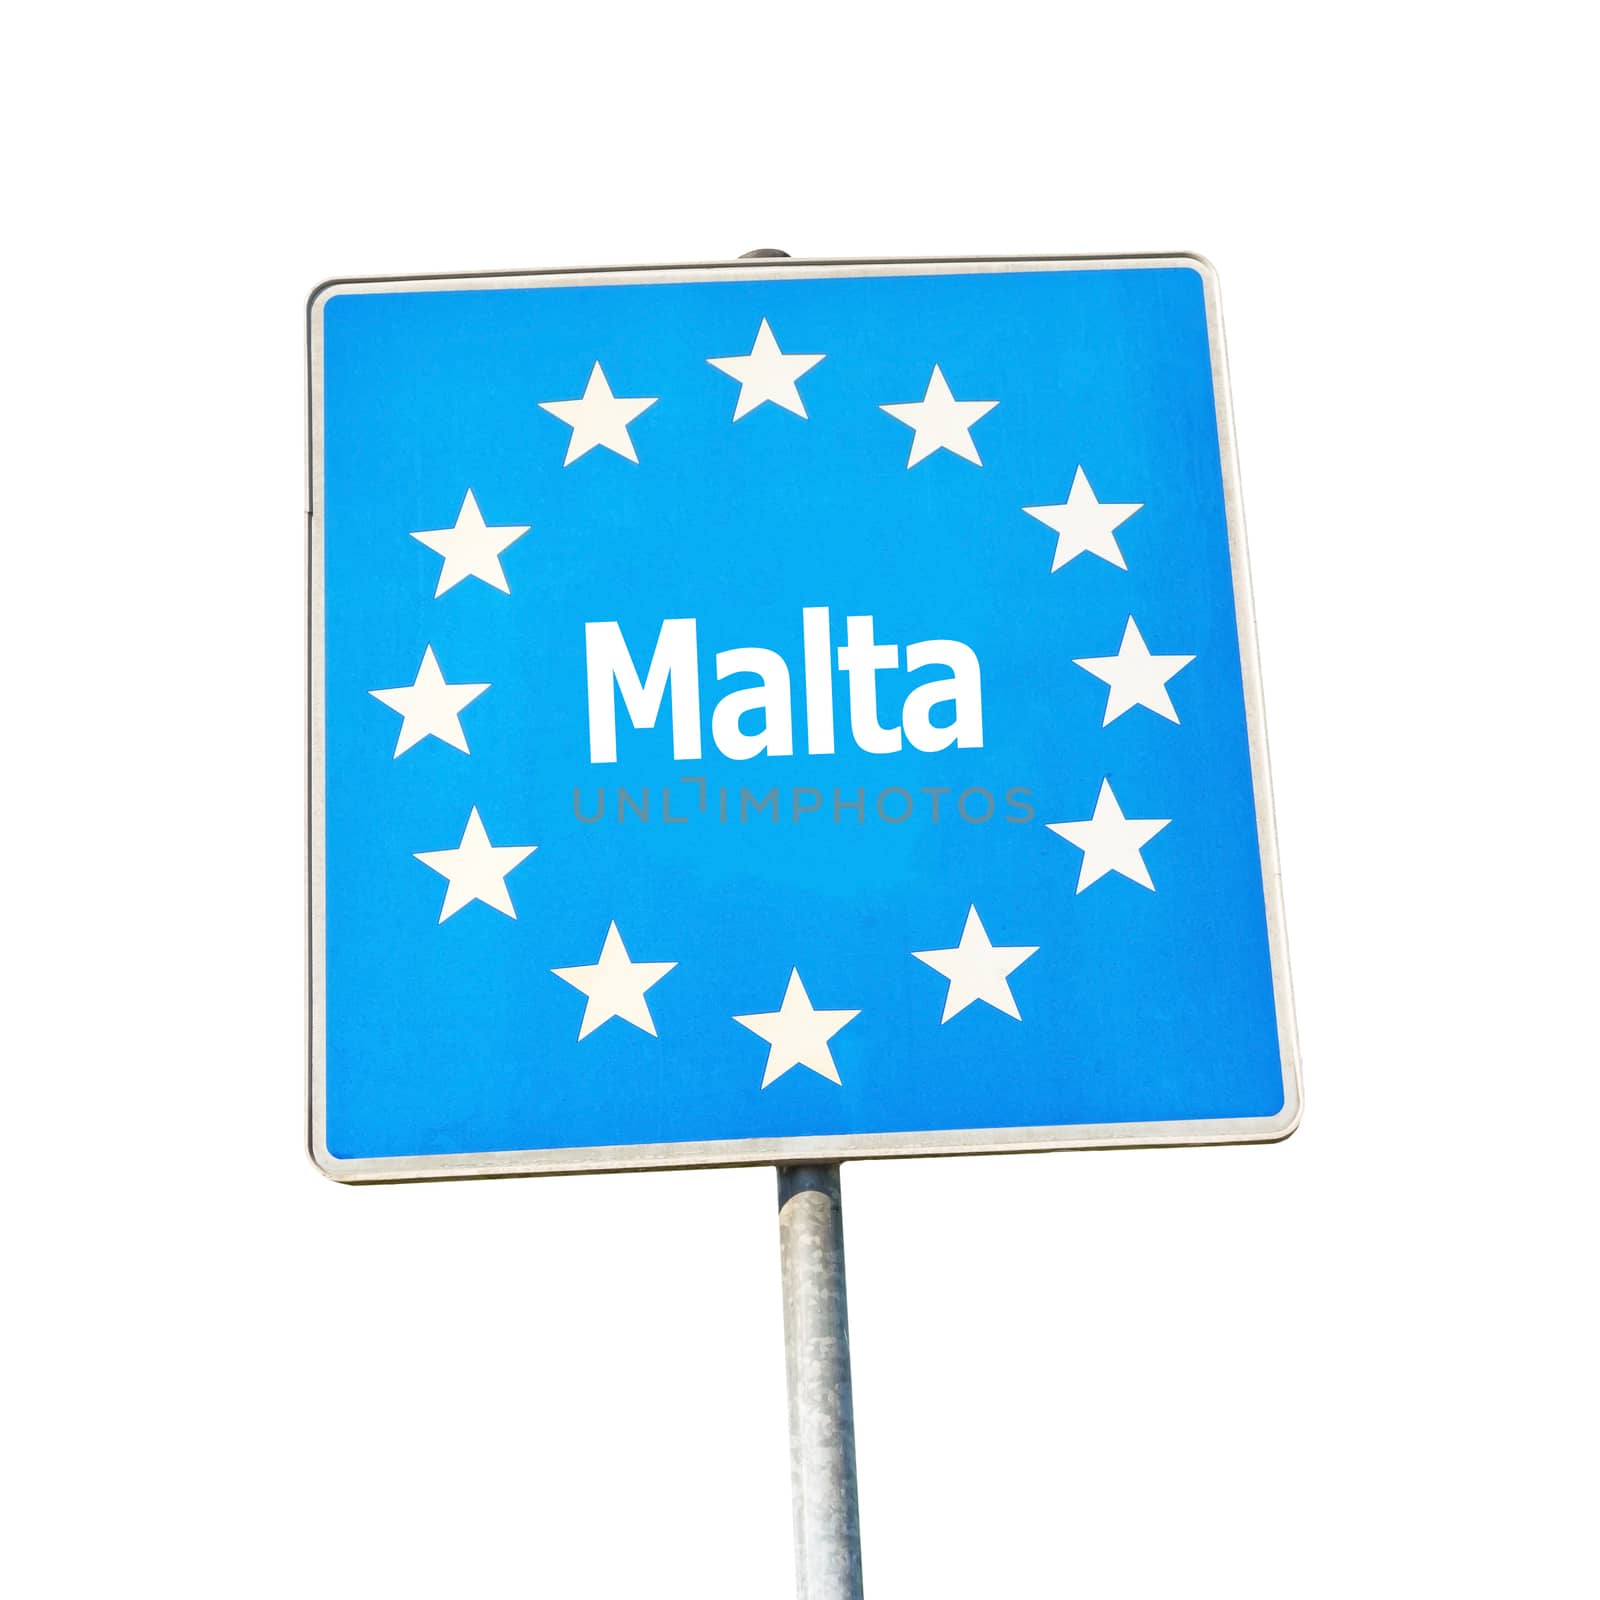 Border sign of malta, europe - isolated on white background